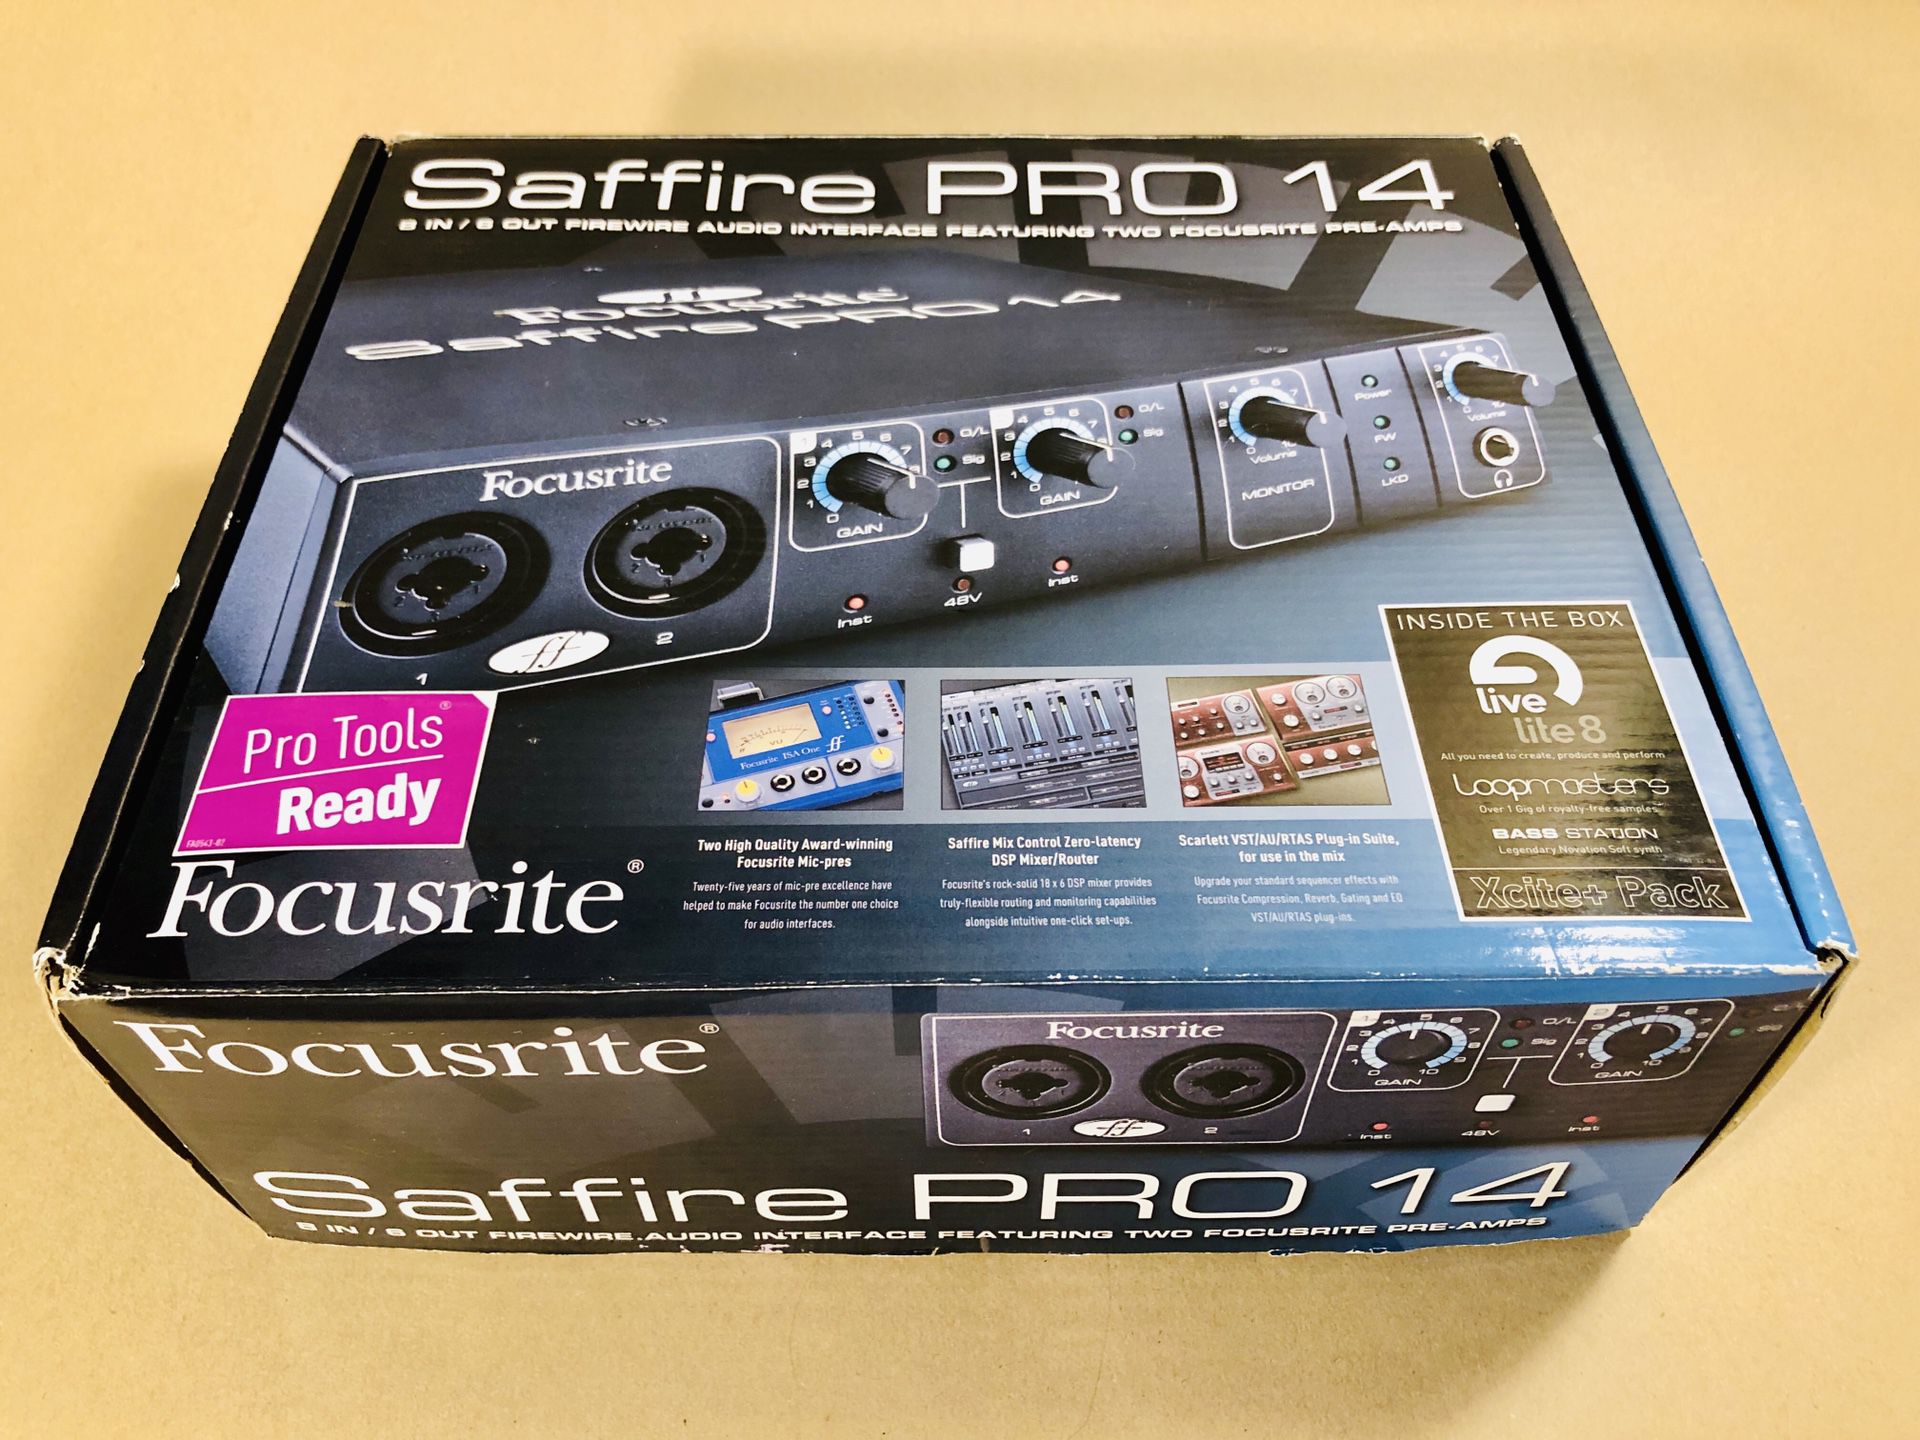 New Focusrite Saffire Pro 14 Audio Recording Interface.